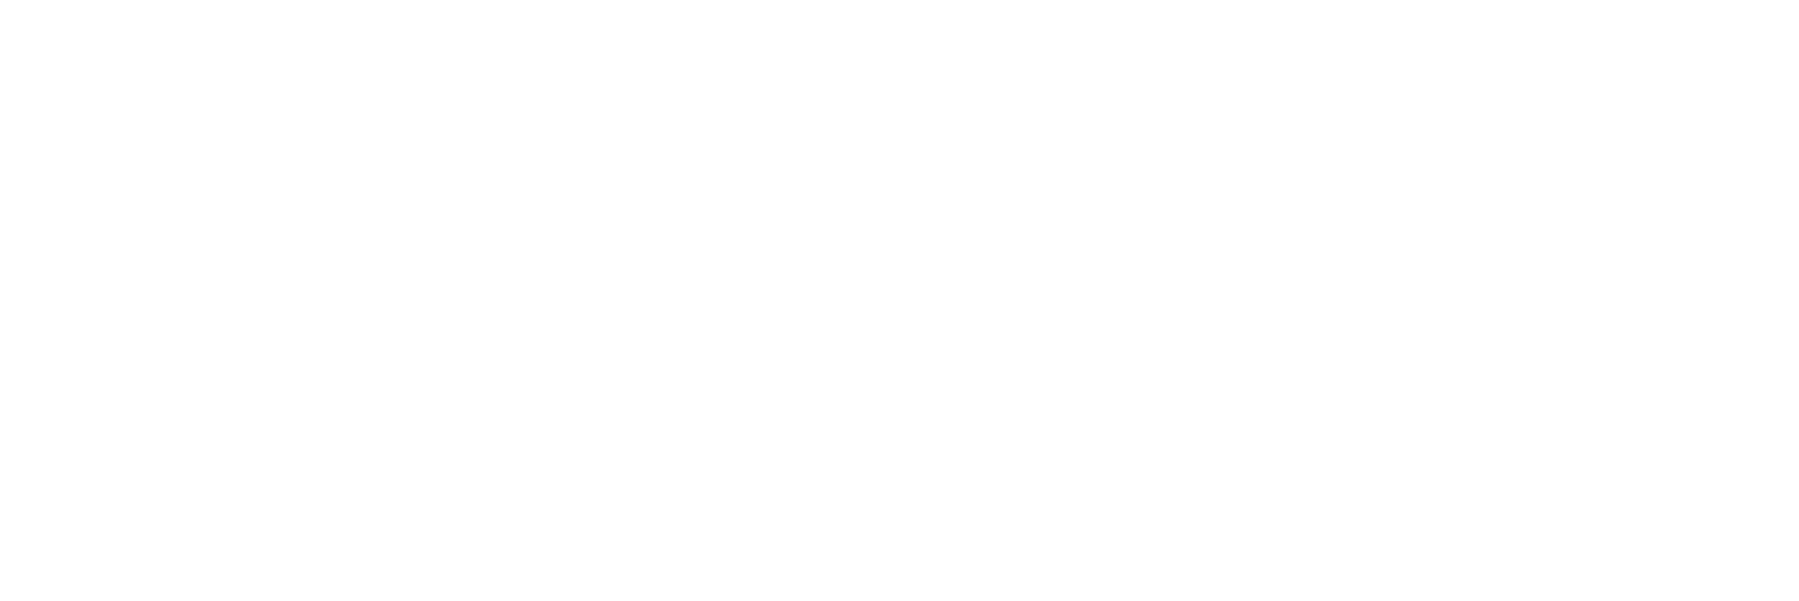 Toshniwal Industries Pvt. Ltd. : Process Instruments, Condition Monitoring,  Environment, Surveillance